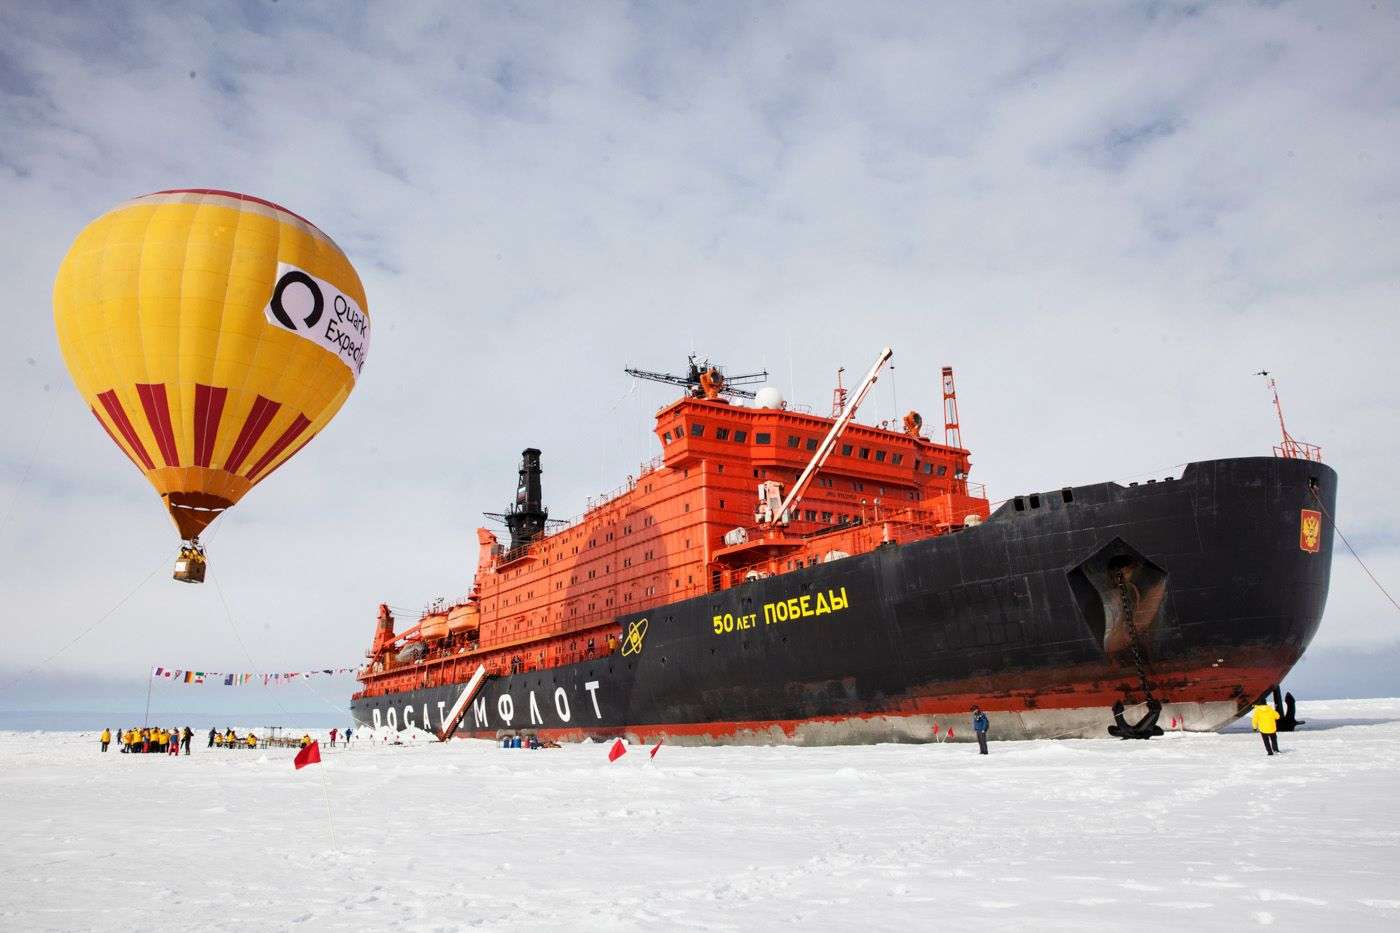 Arctic hot air balloon